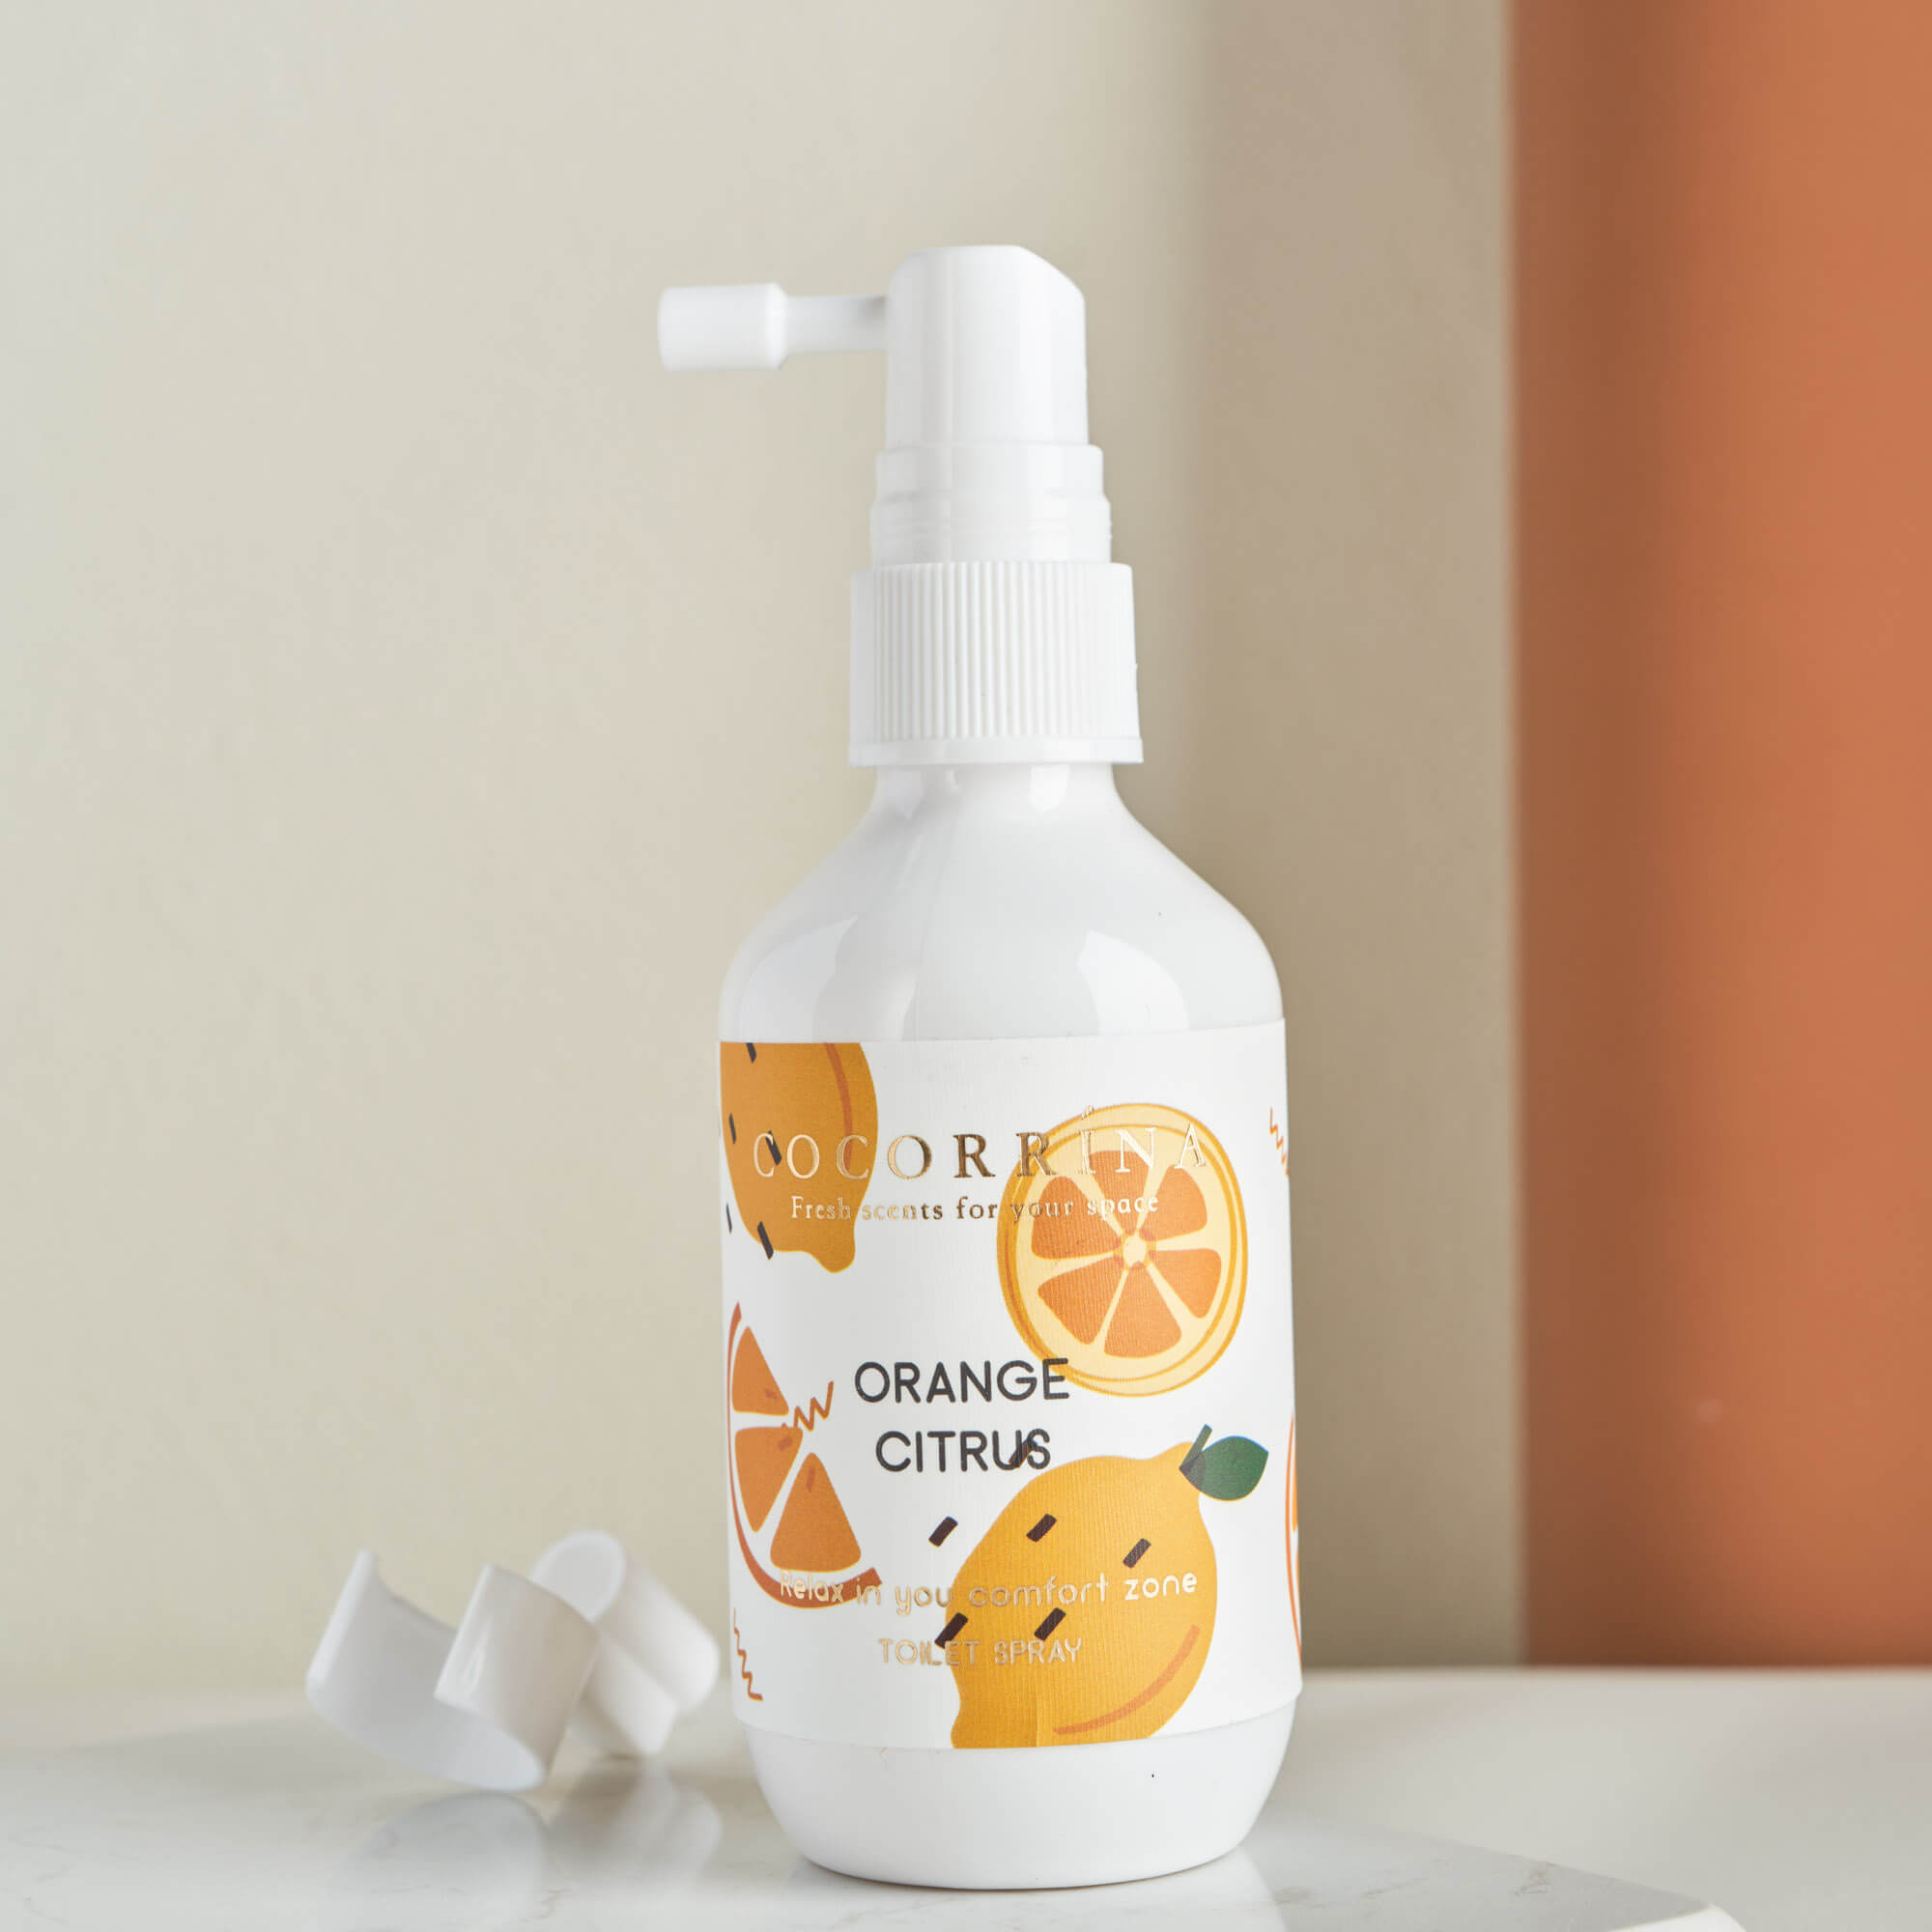 COCORRÍNA Orange Citrus Toilet Spray